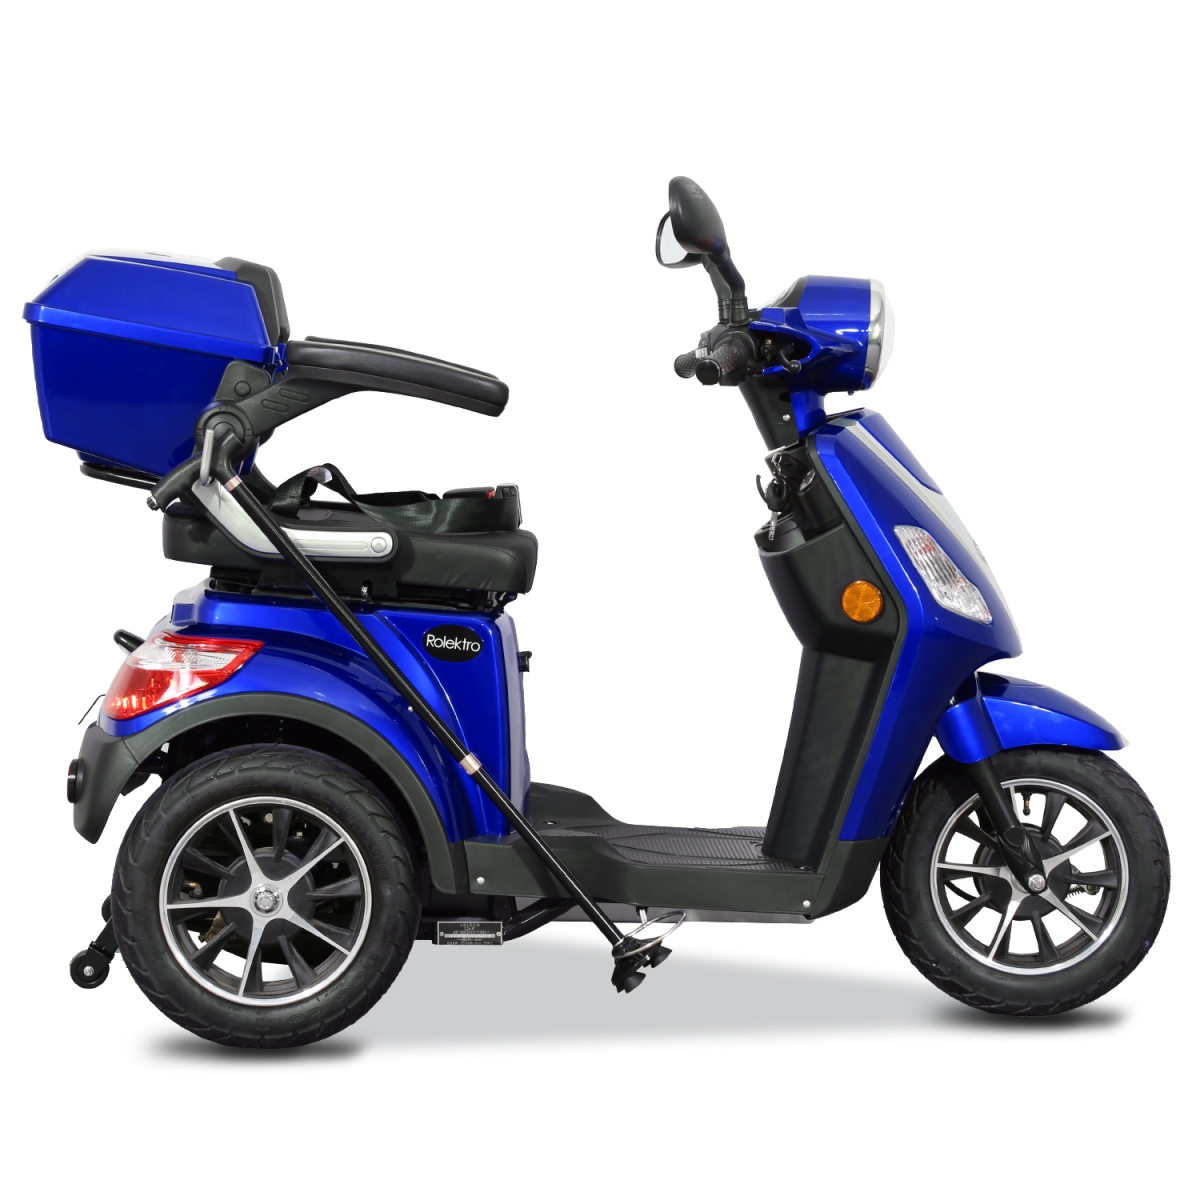 Rolektro E-Trike V.2 25 km/h, 1000 Watt in Rot | Blau | Schwarz